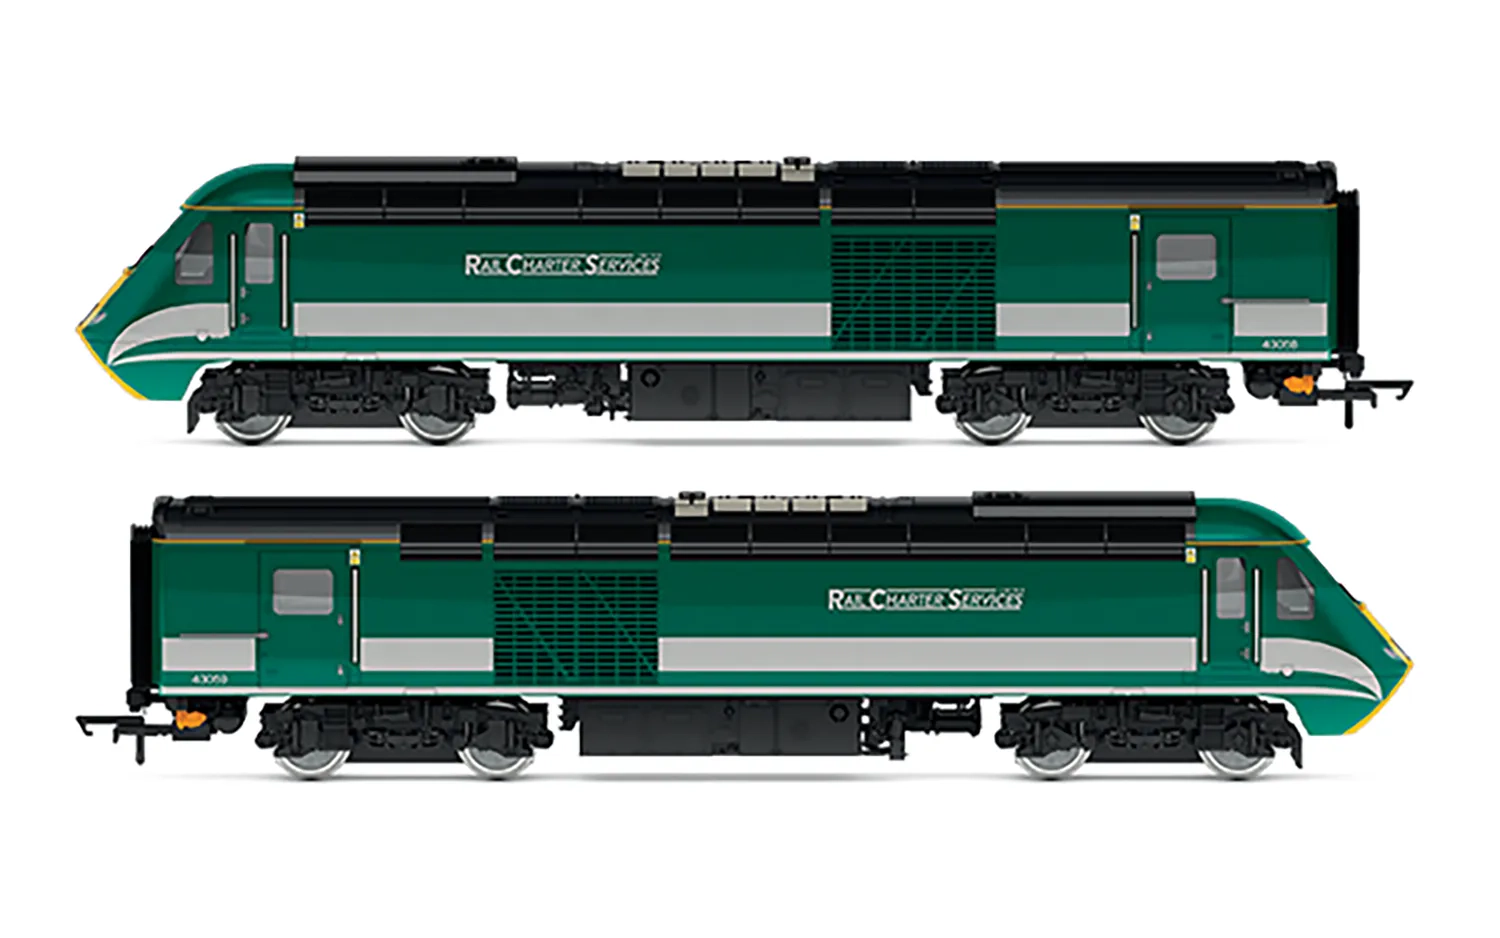 Rail Charter Services HST Train Pack - Era 11